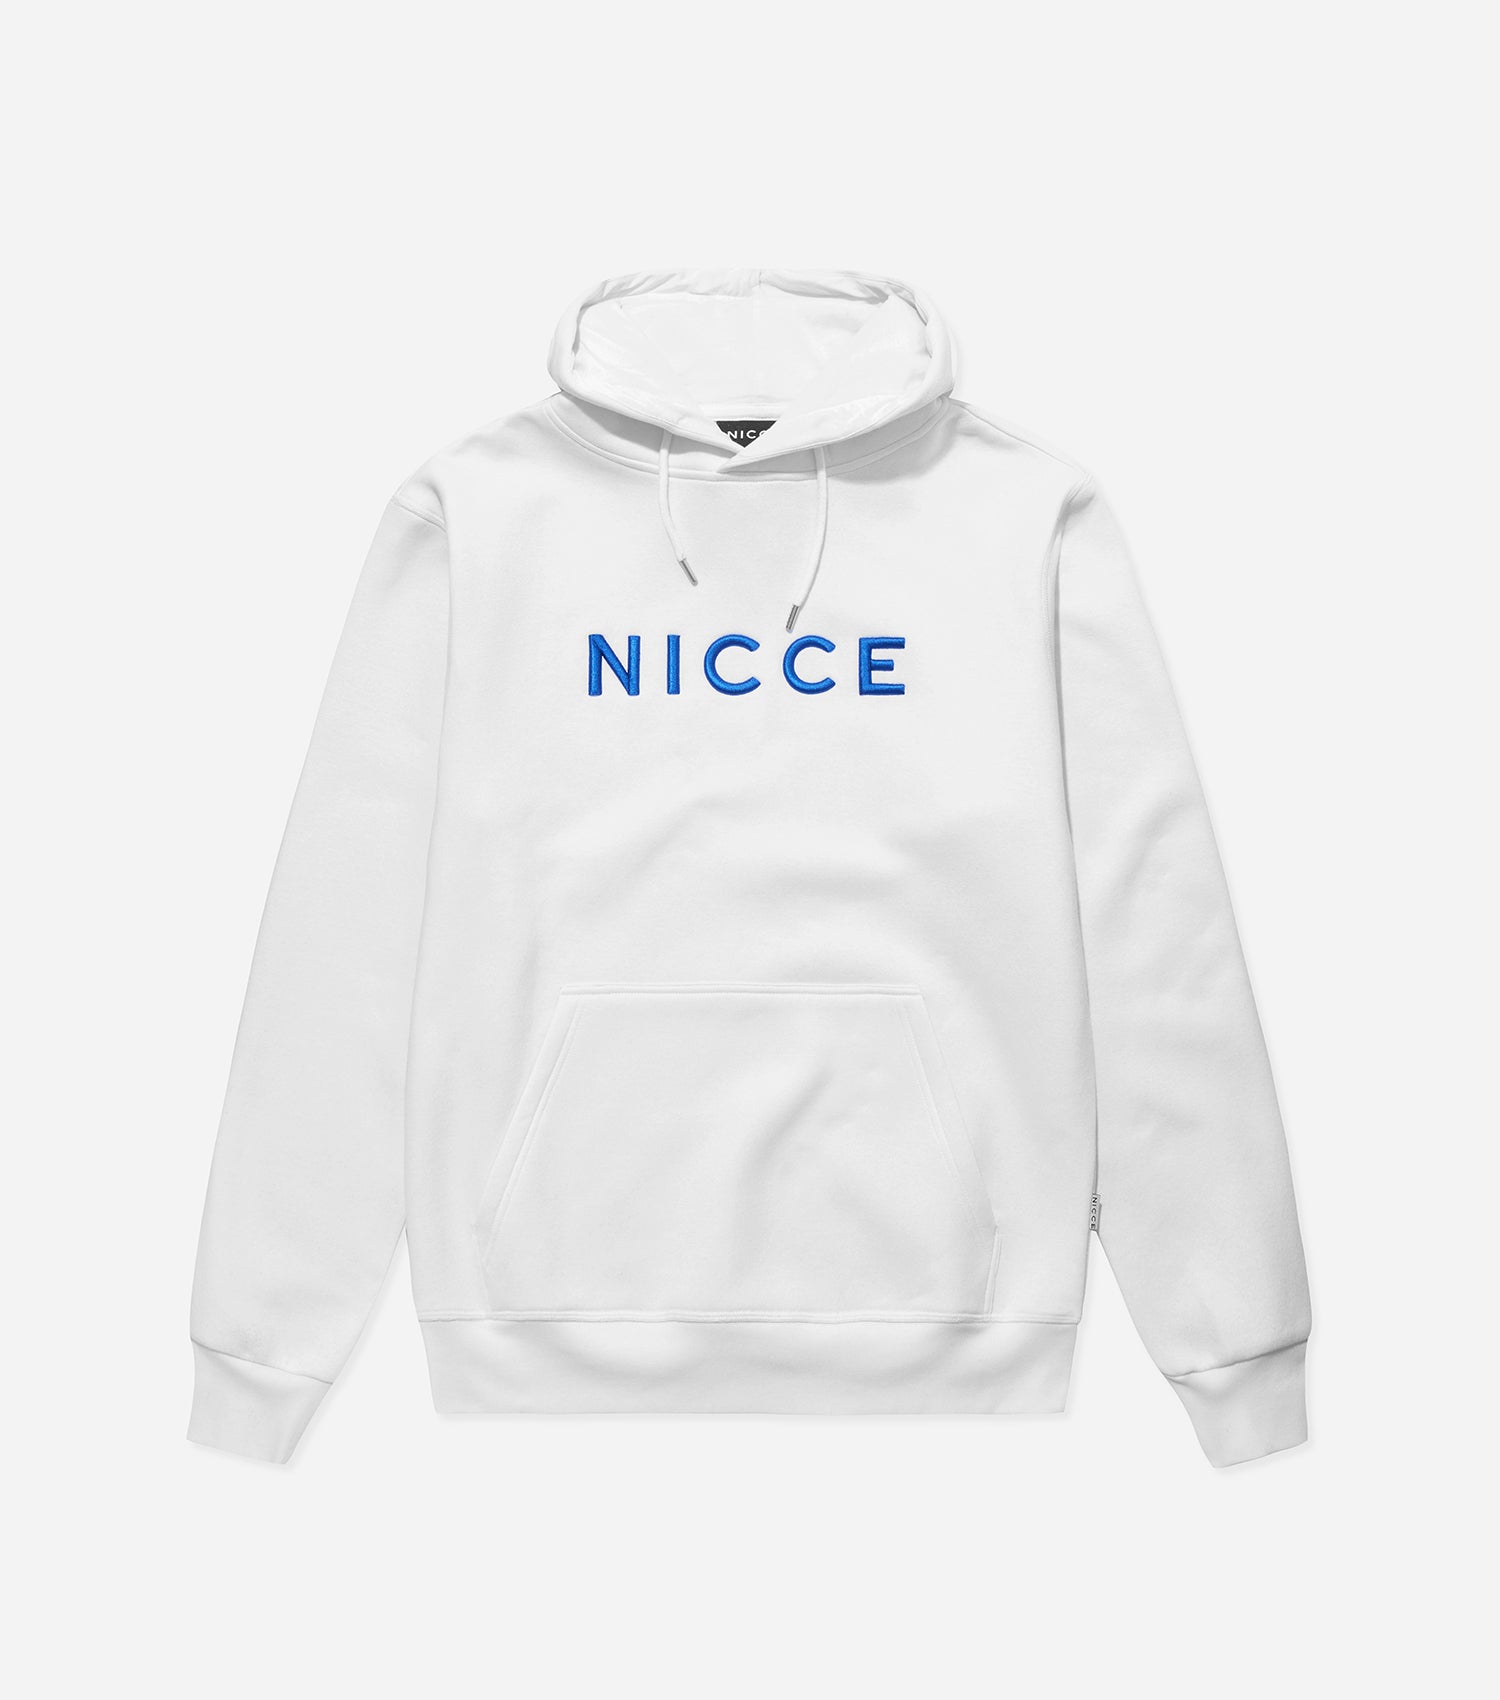 nicce white sweatshirt